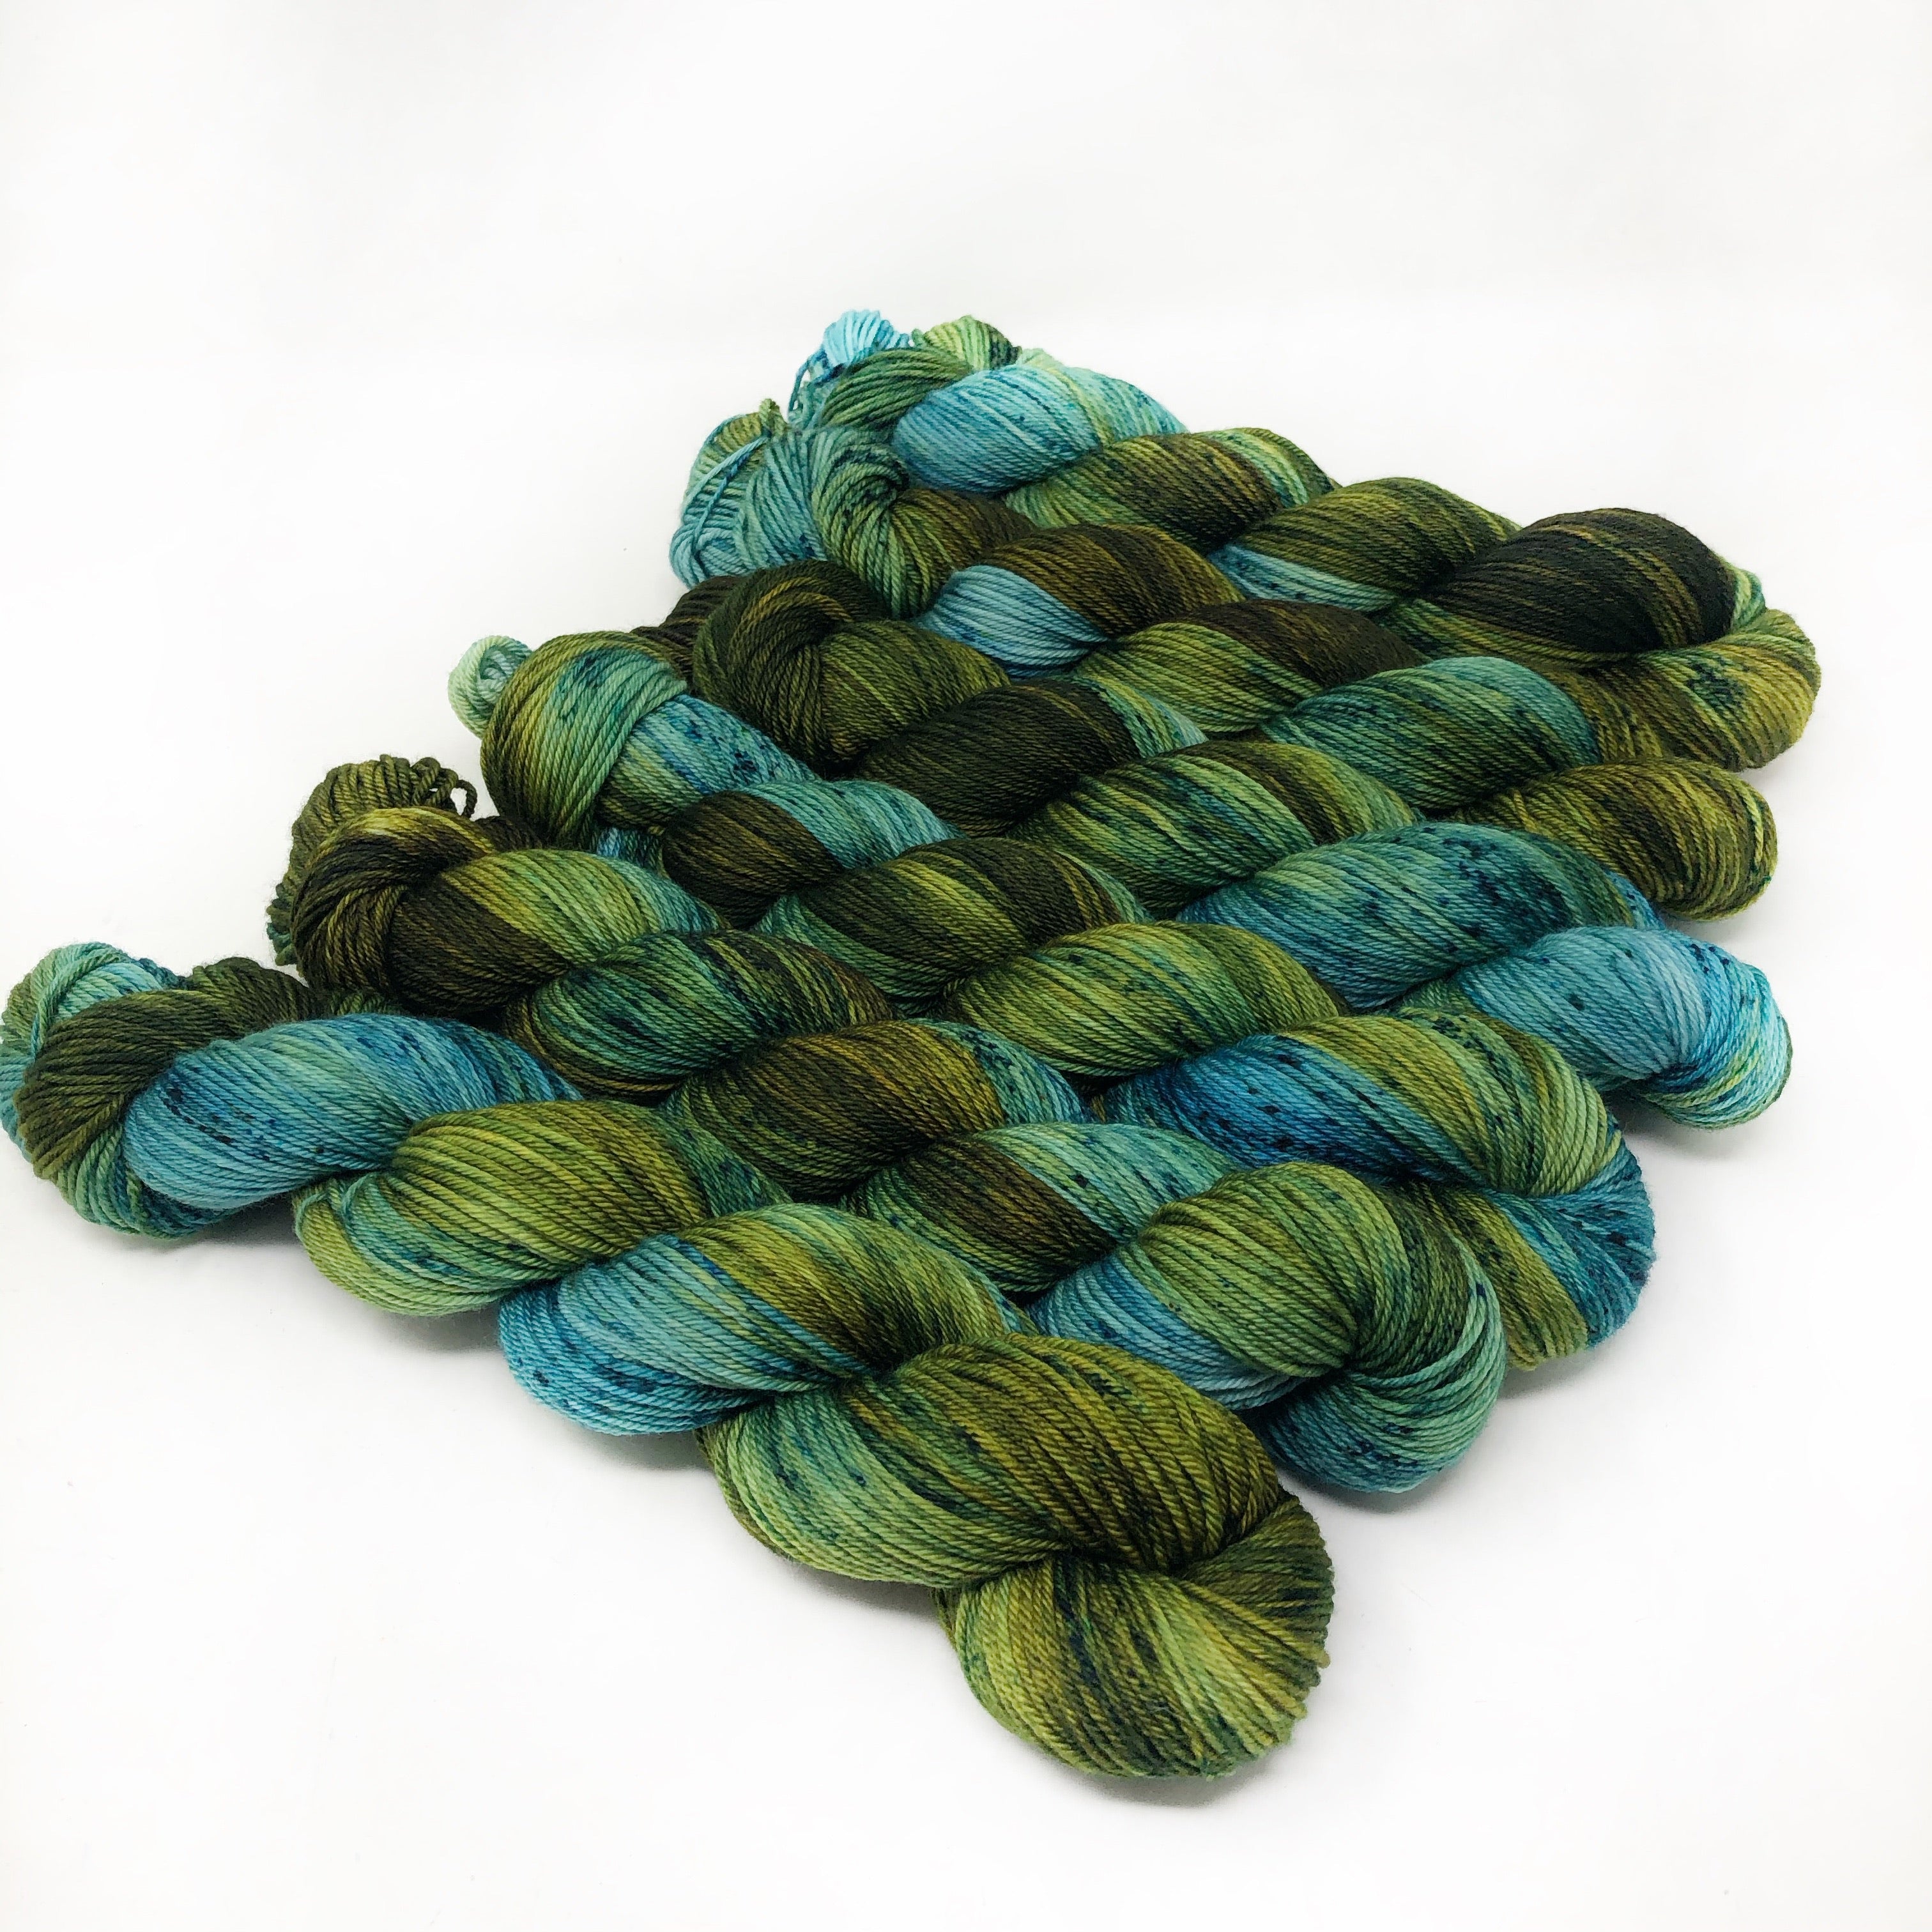 Algae - Delightful DK - the perfect sweater yarn